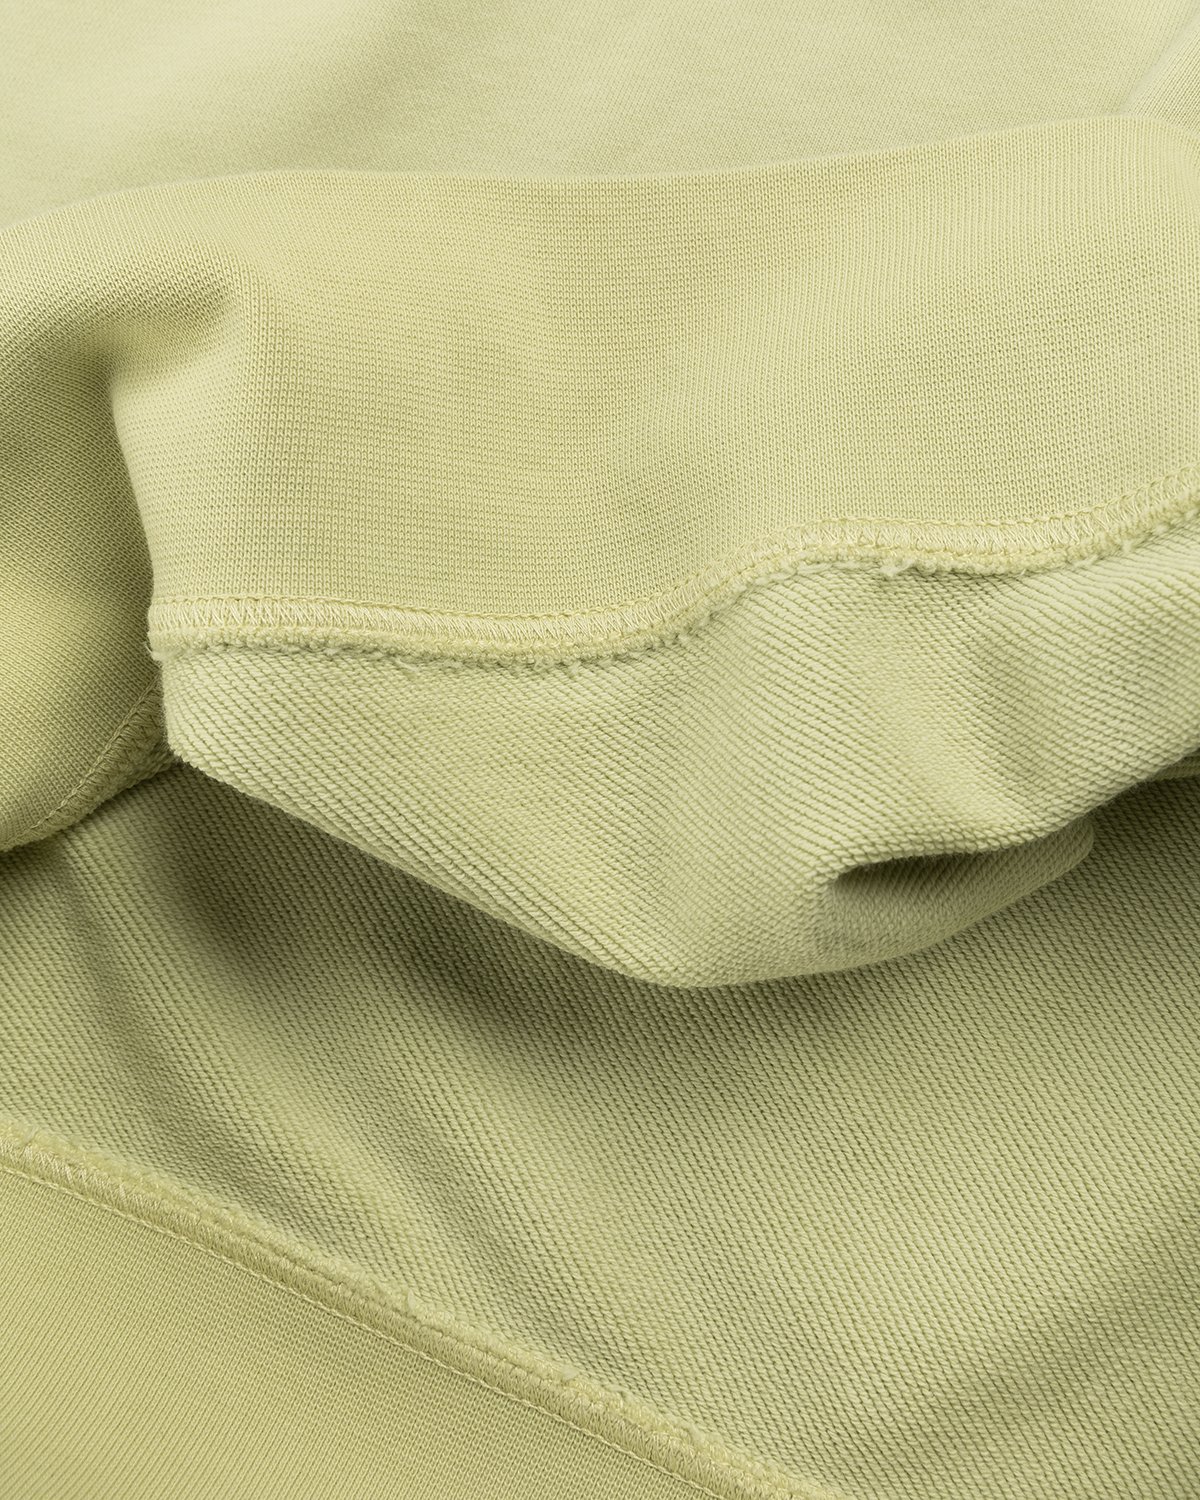 Stone Island - 63051 Garment-Dyed Cotton Fleece Crewneck Light Green - Clothing - Green - Image 6